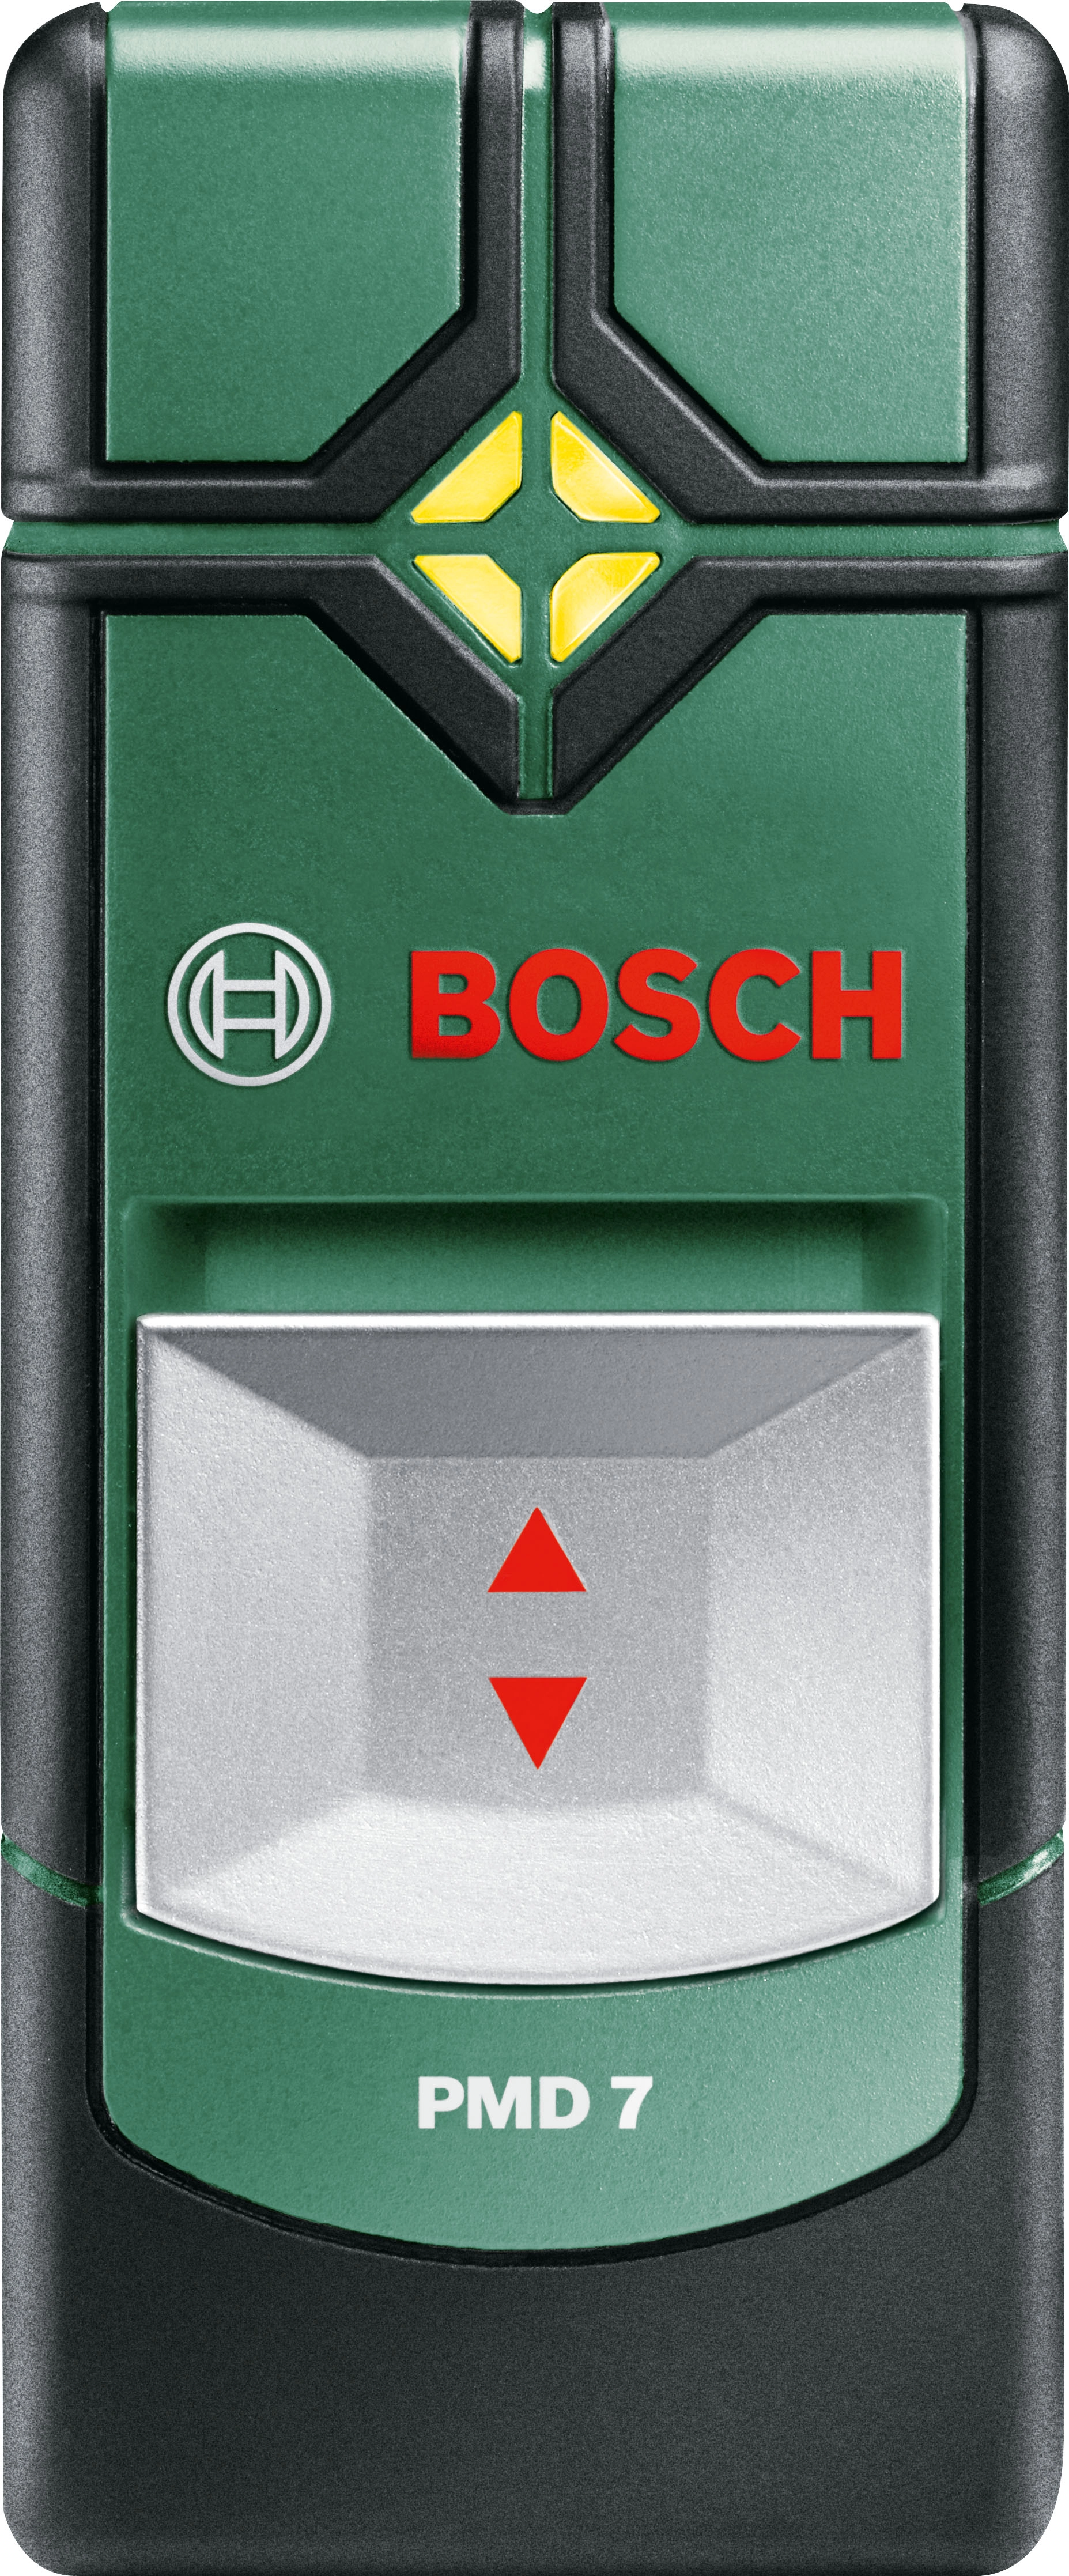 Bosch Professional Ortungsgerät GMS 120 mm kaufen bei OBI